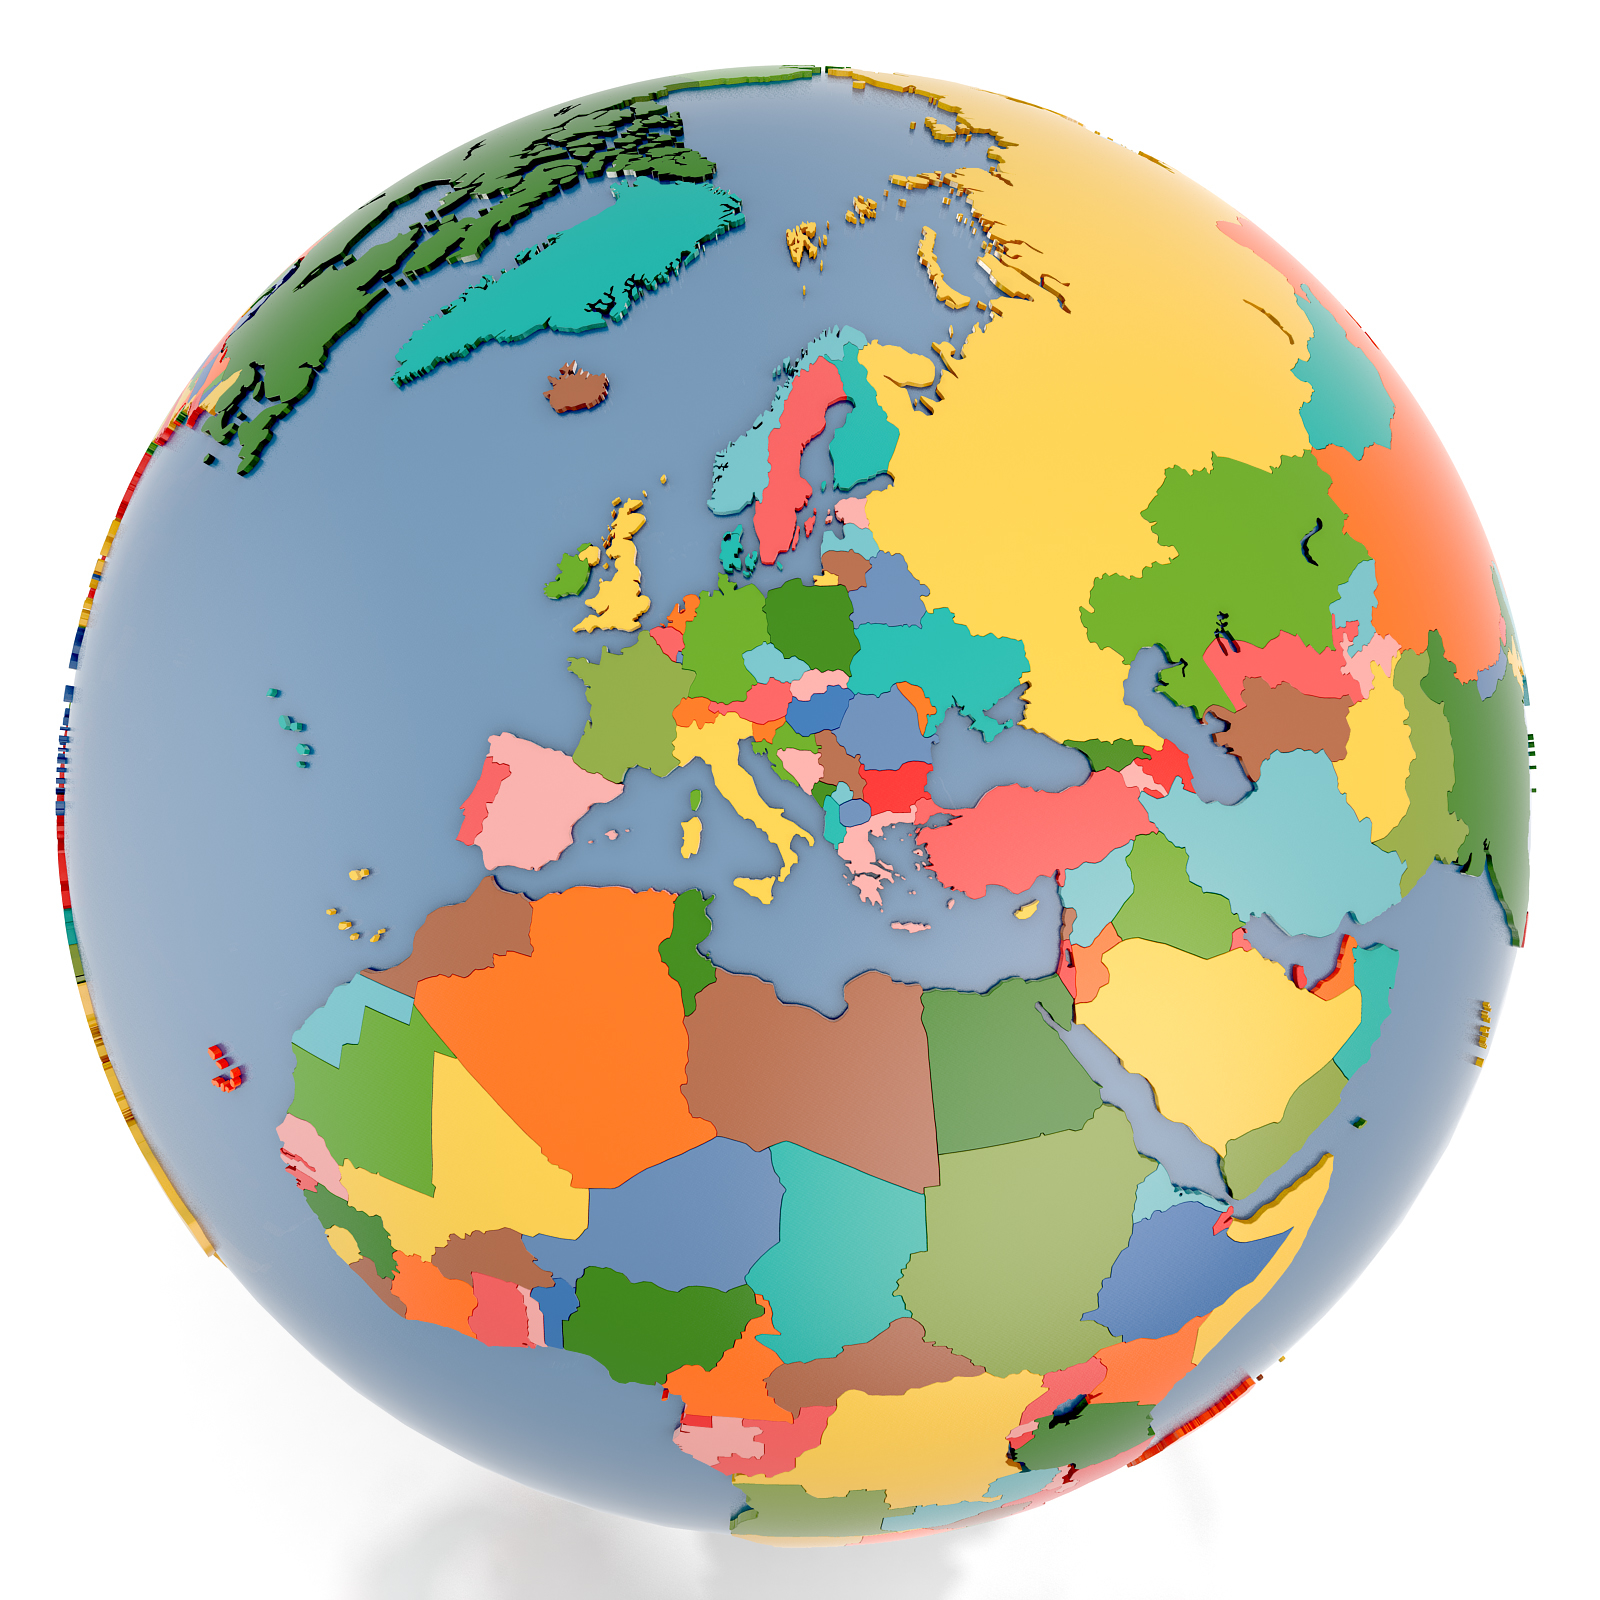 3d Country World Globe Model